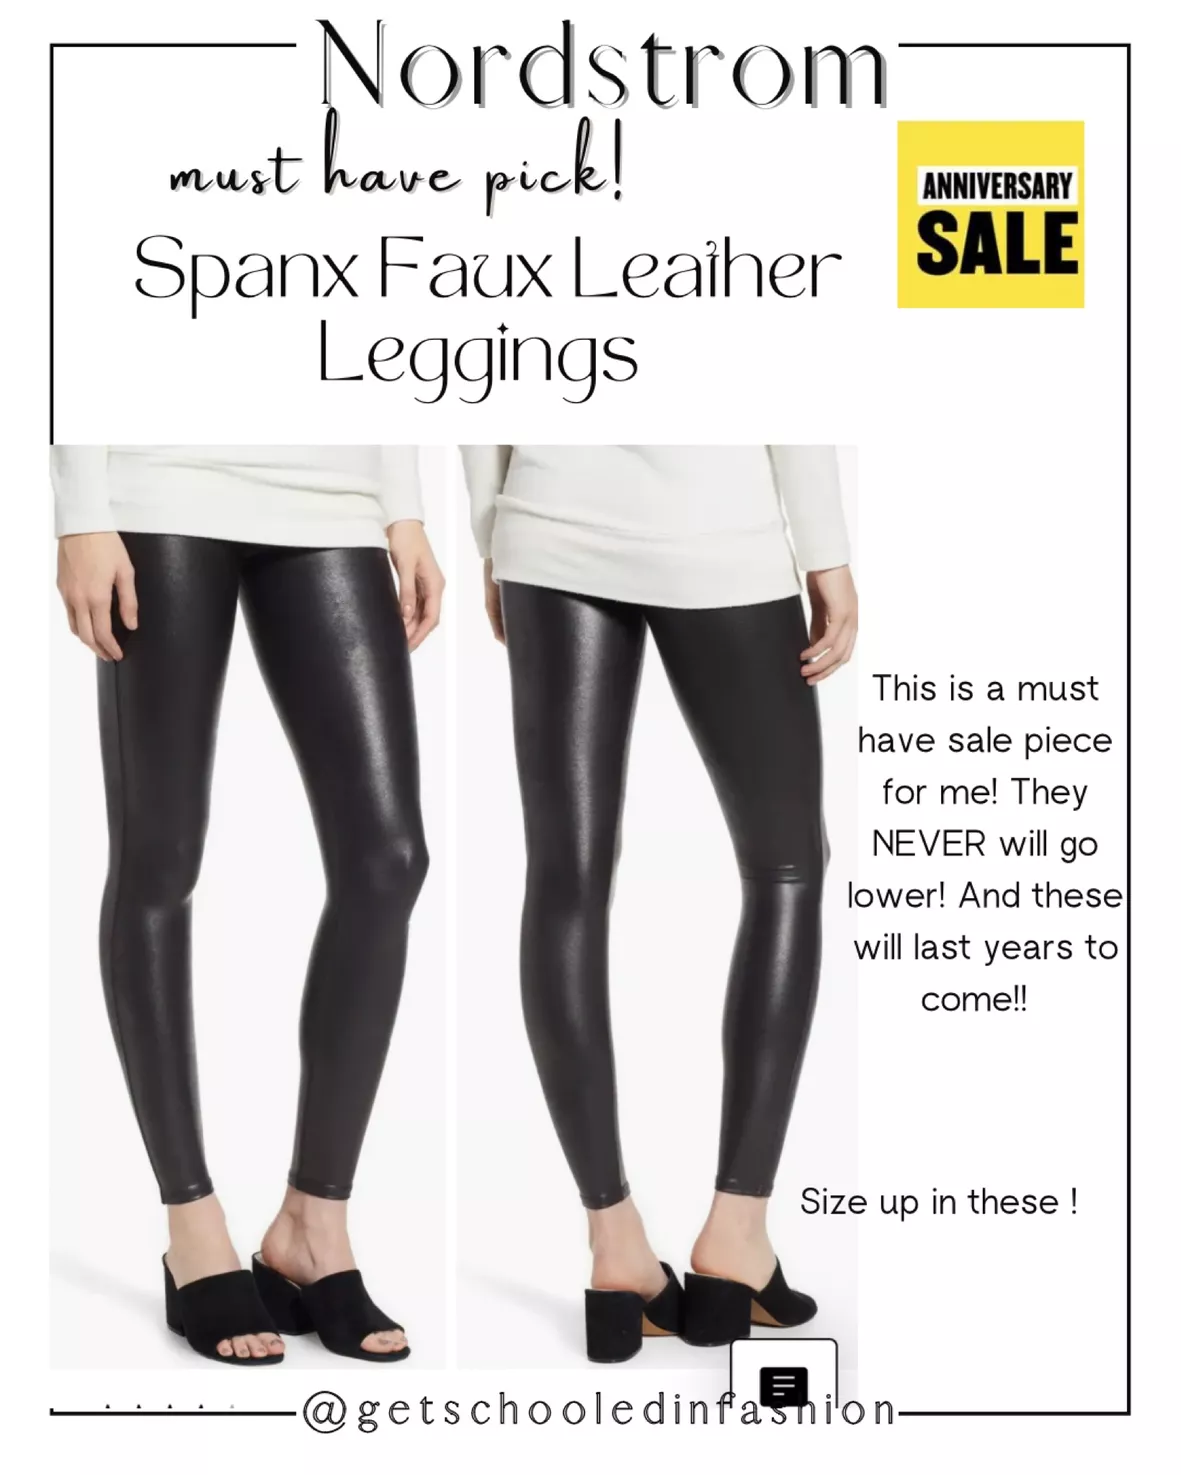 Nordstrom SPANX® Faux Leather Leggings, Nordstrom